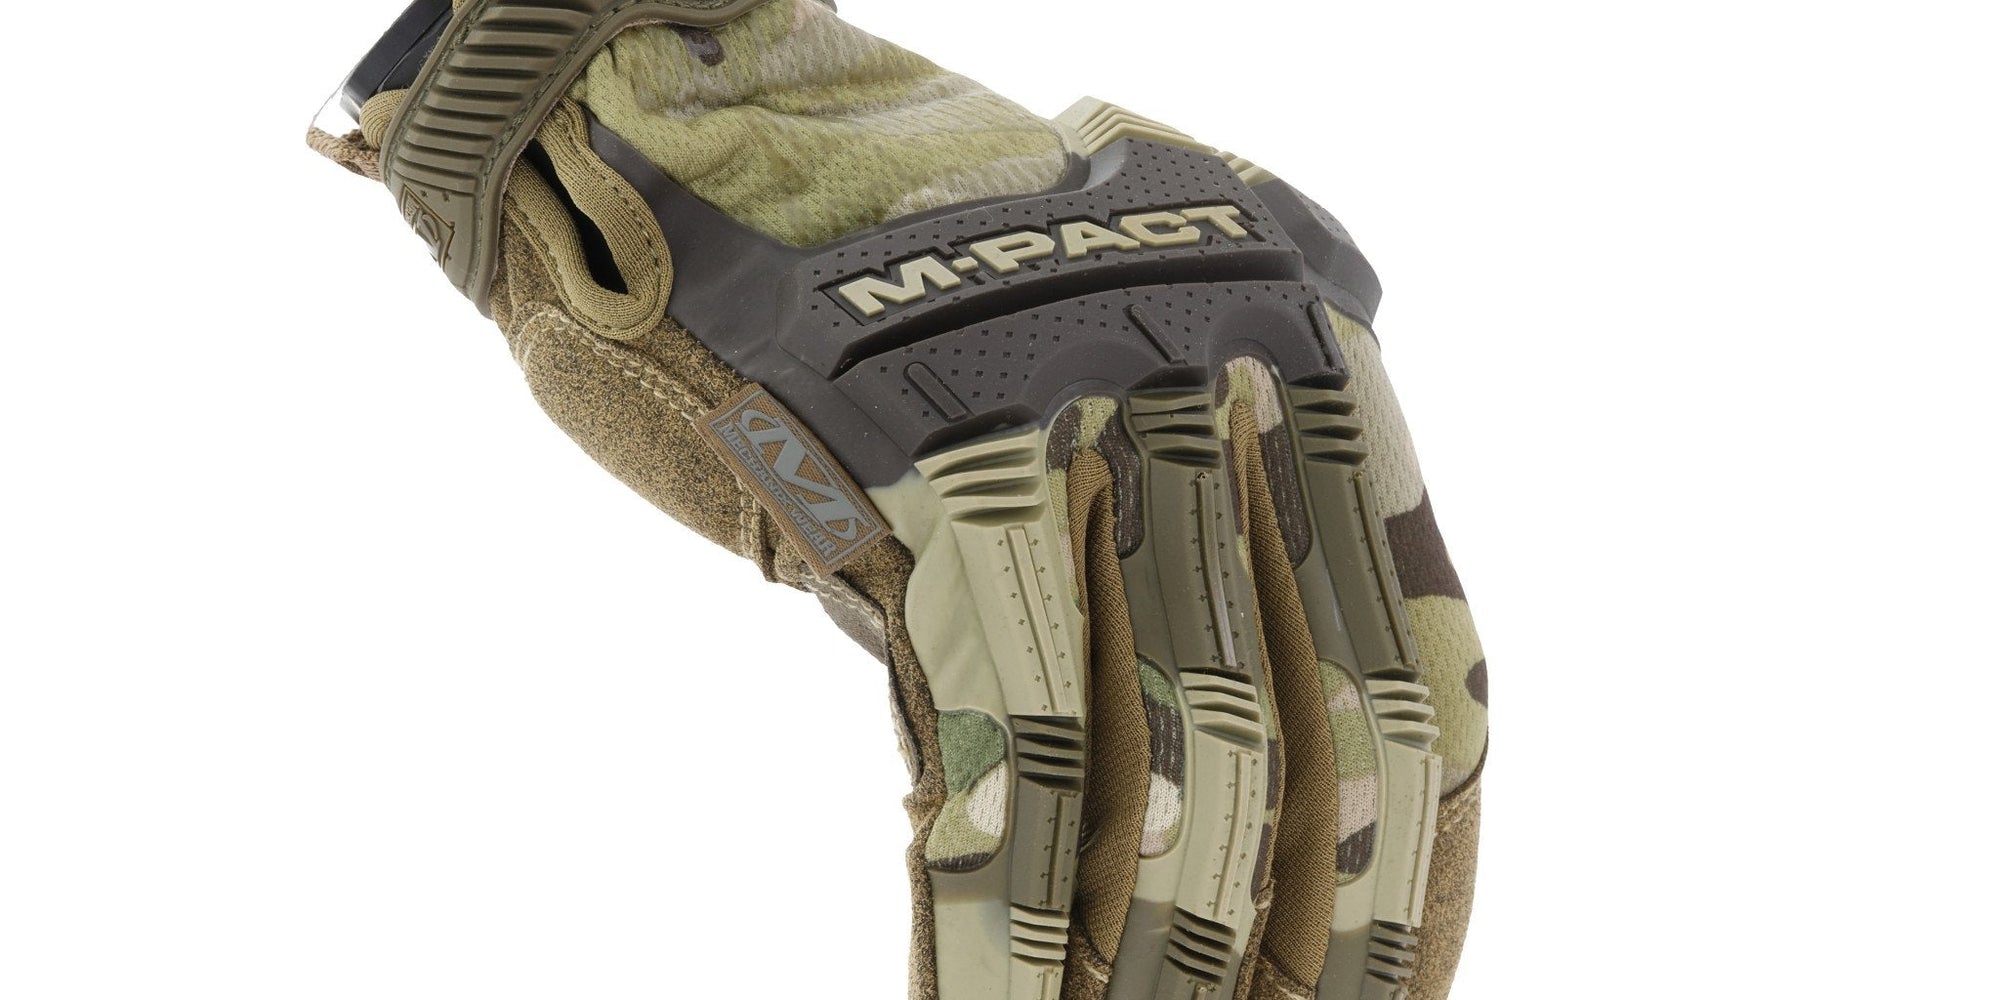 Mechanix Wear M-Pact Tactical Glove MultiCam Gloves Mechanix Wear Small Tactical Gear Supplier Tactical Distributors Australia